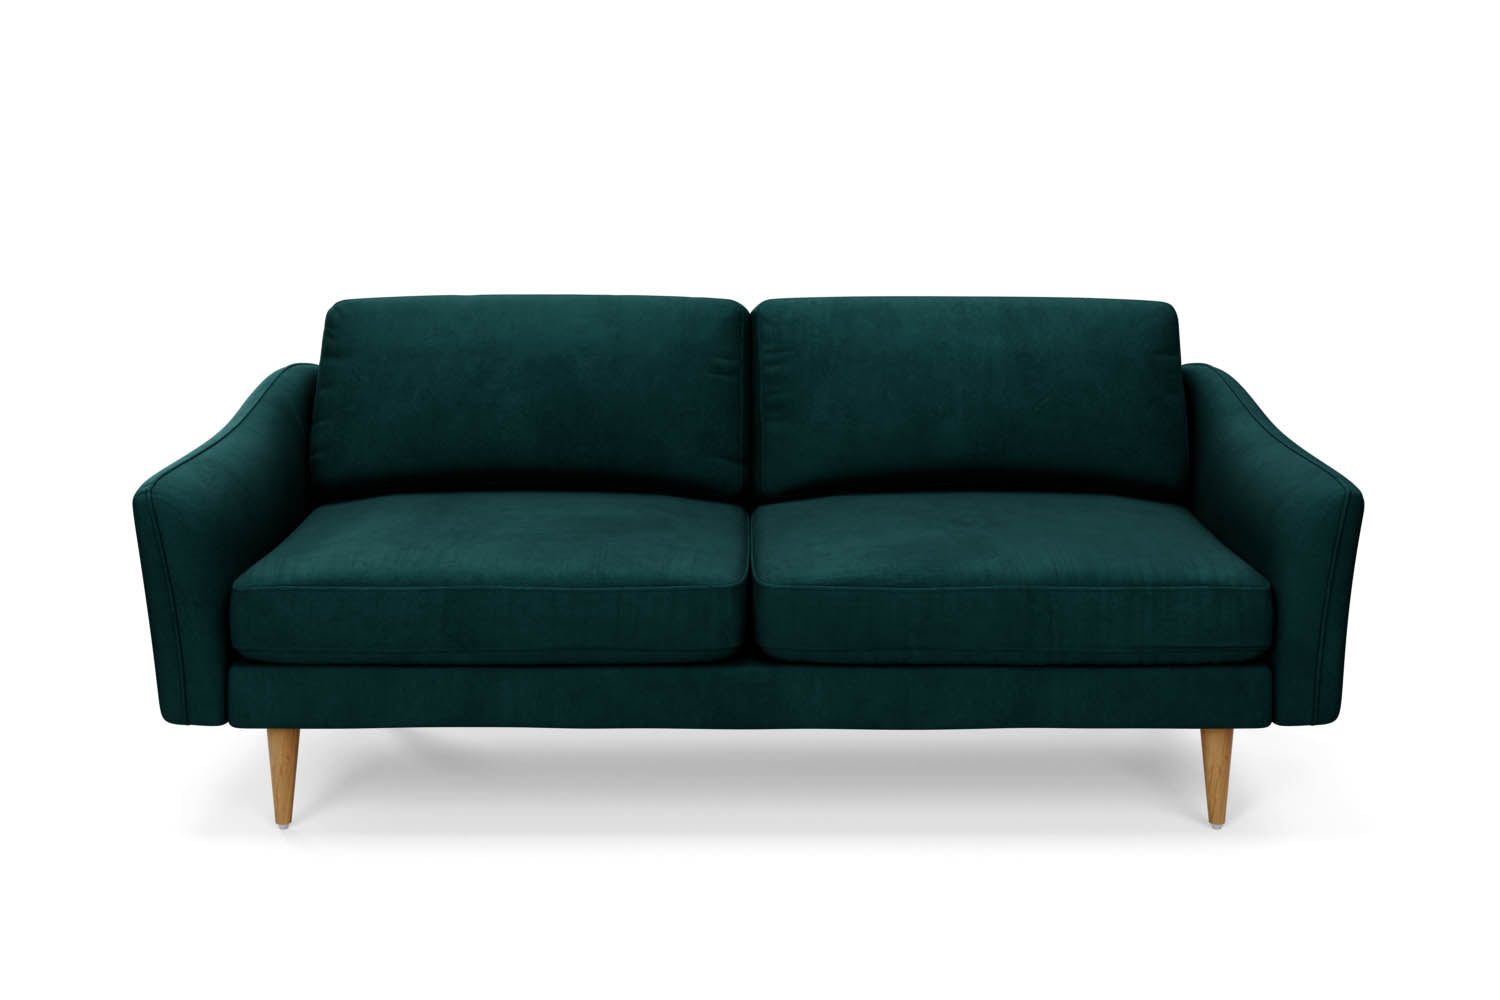 SNUG | The Rebel 3 Seater Sofa in Pine Green variant_40837198839856